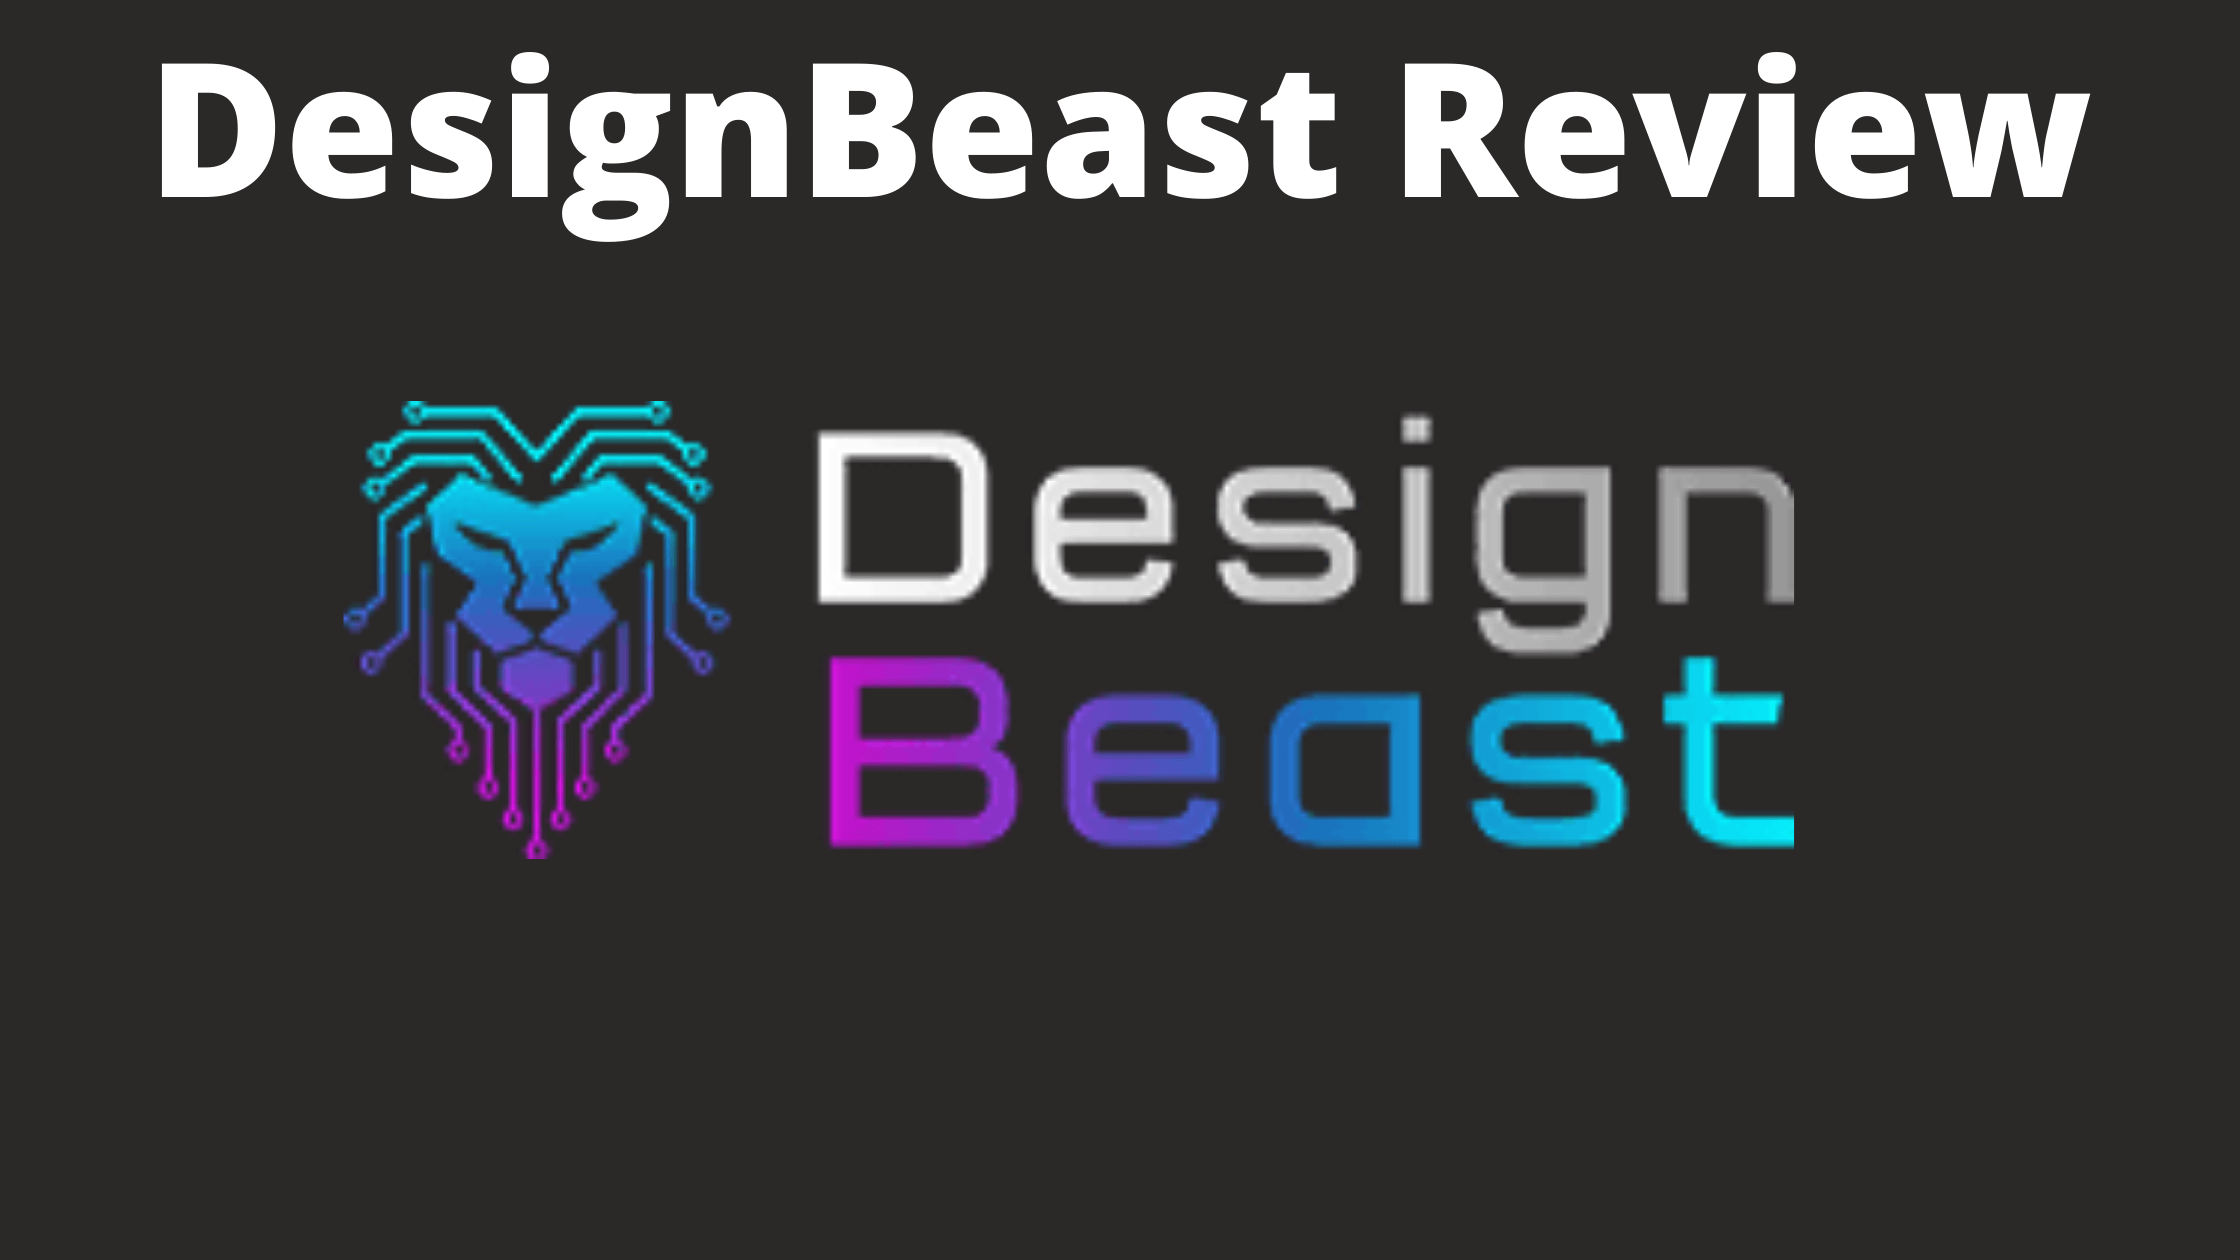 DesignBeast Review